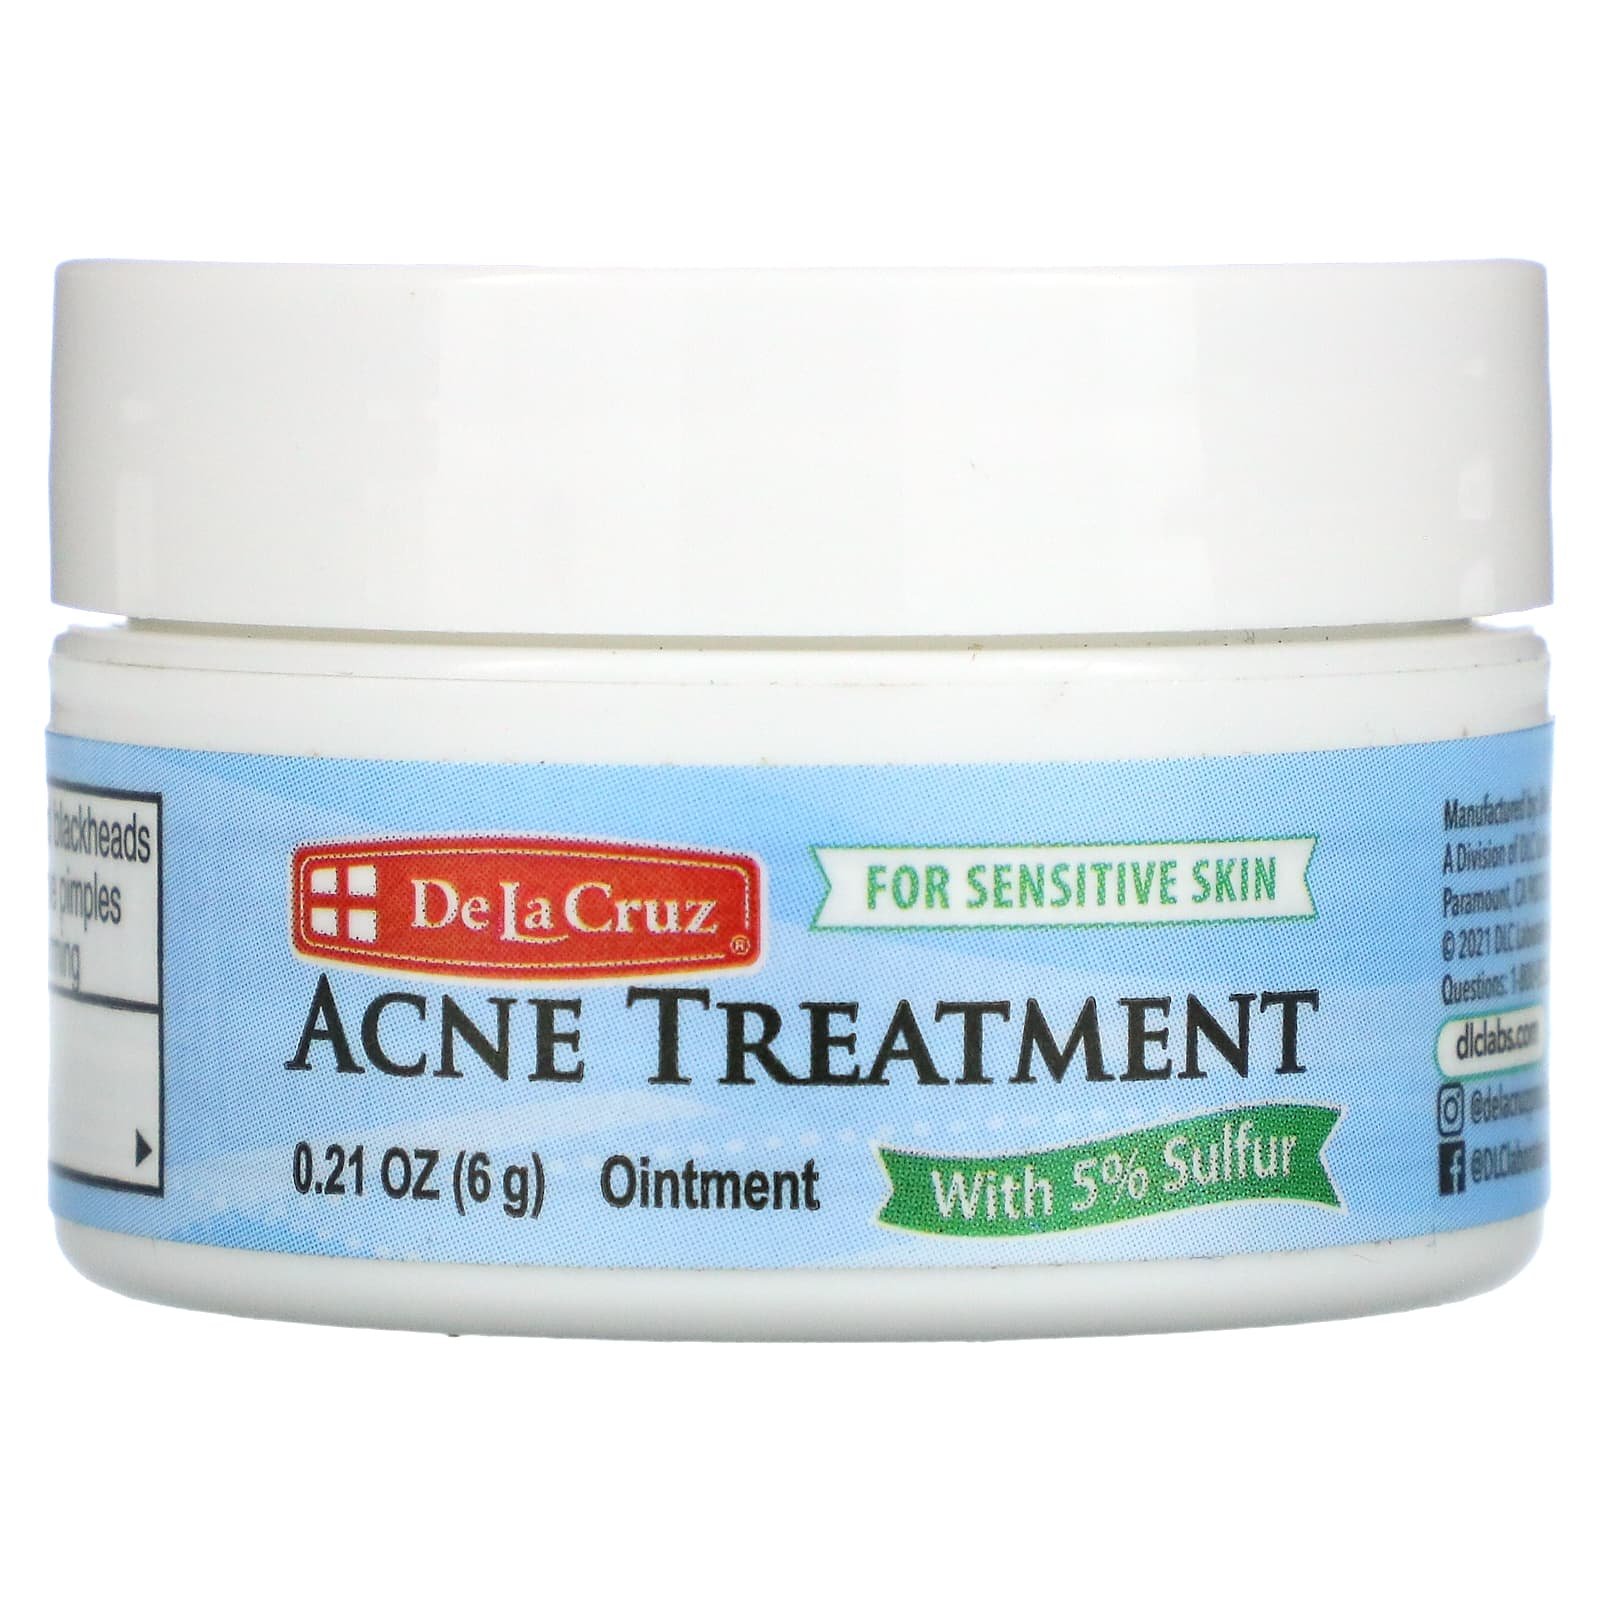 De La Cruz Acne Treatment Ointment Price In Uae